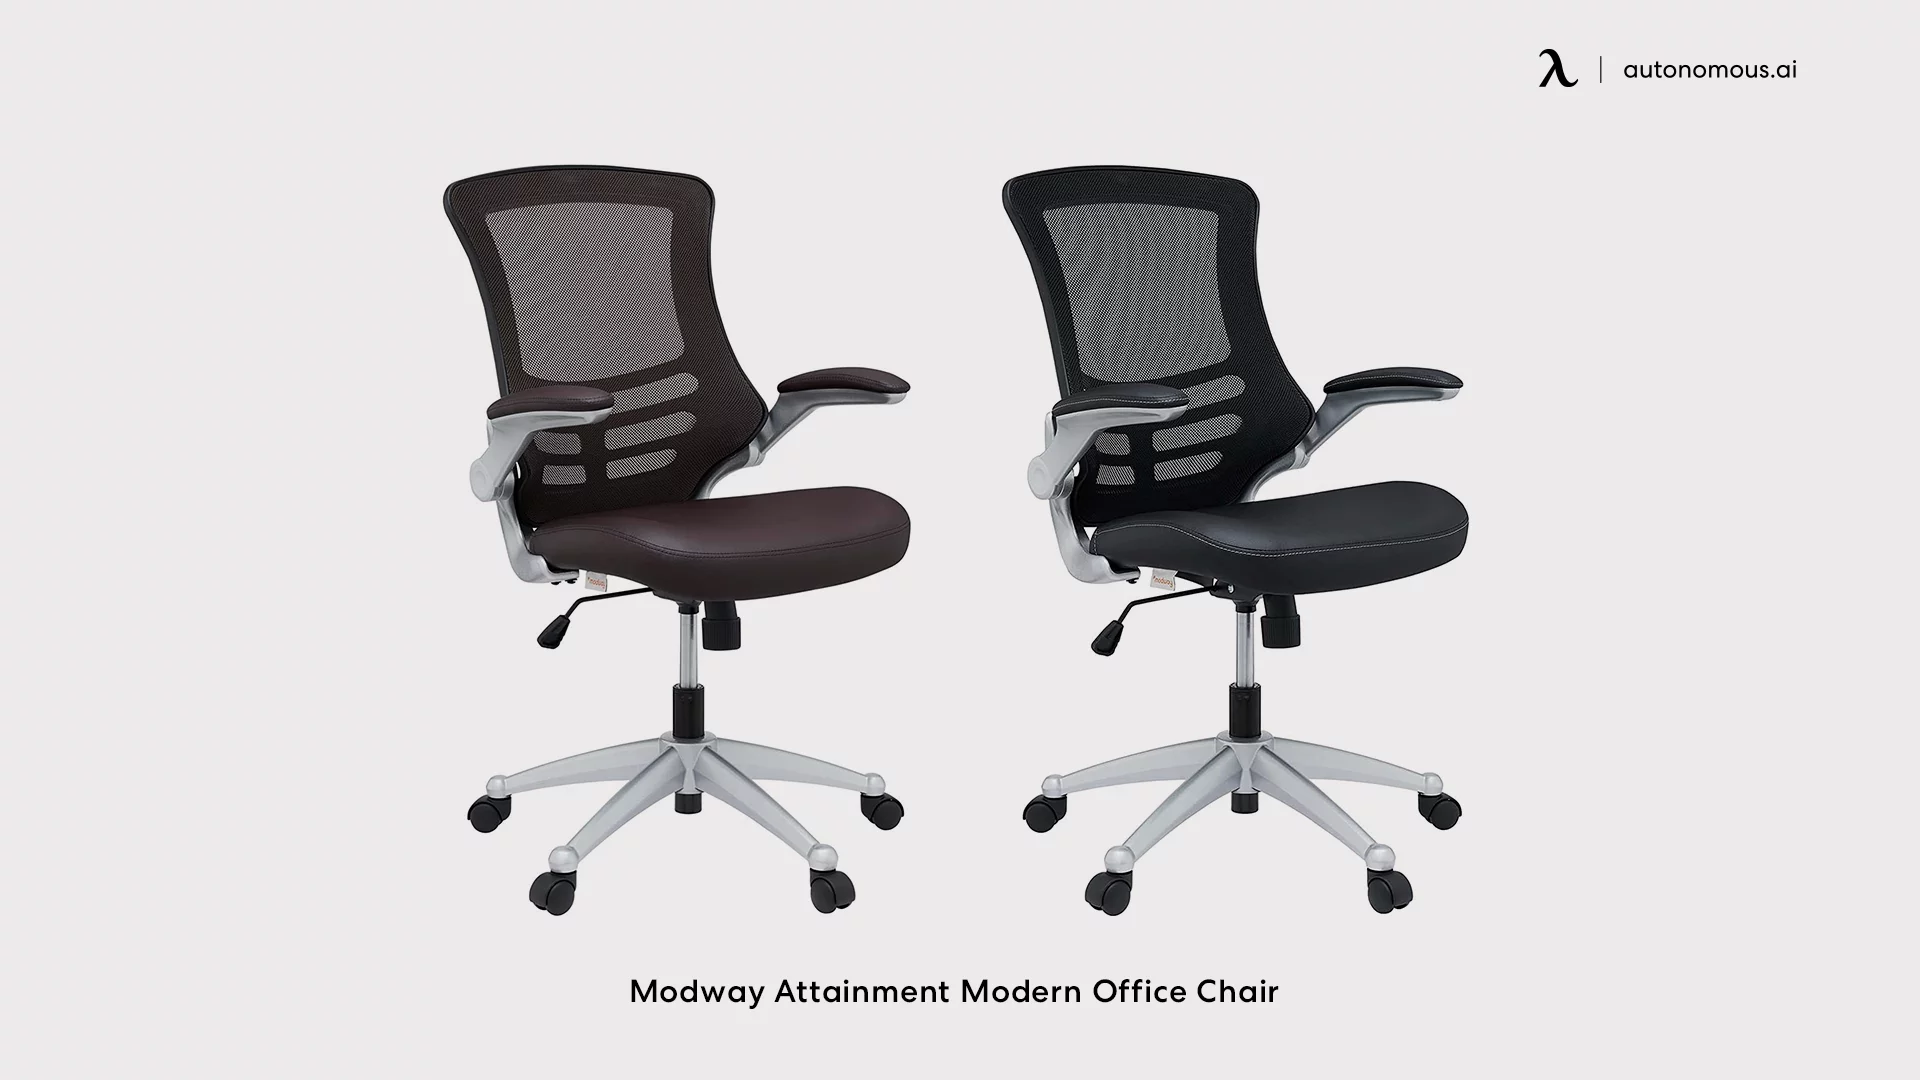 Modway Attainment Modern Office Chair